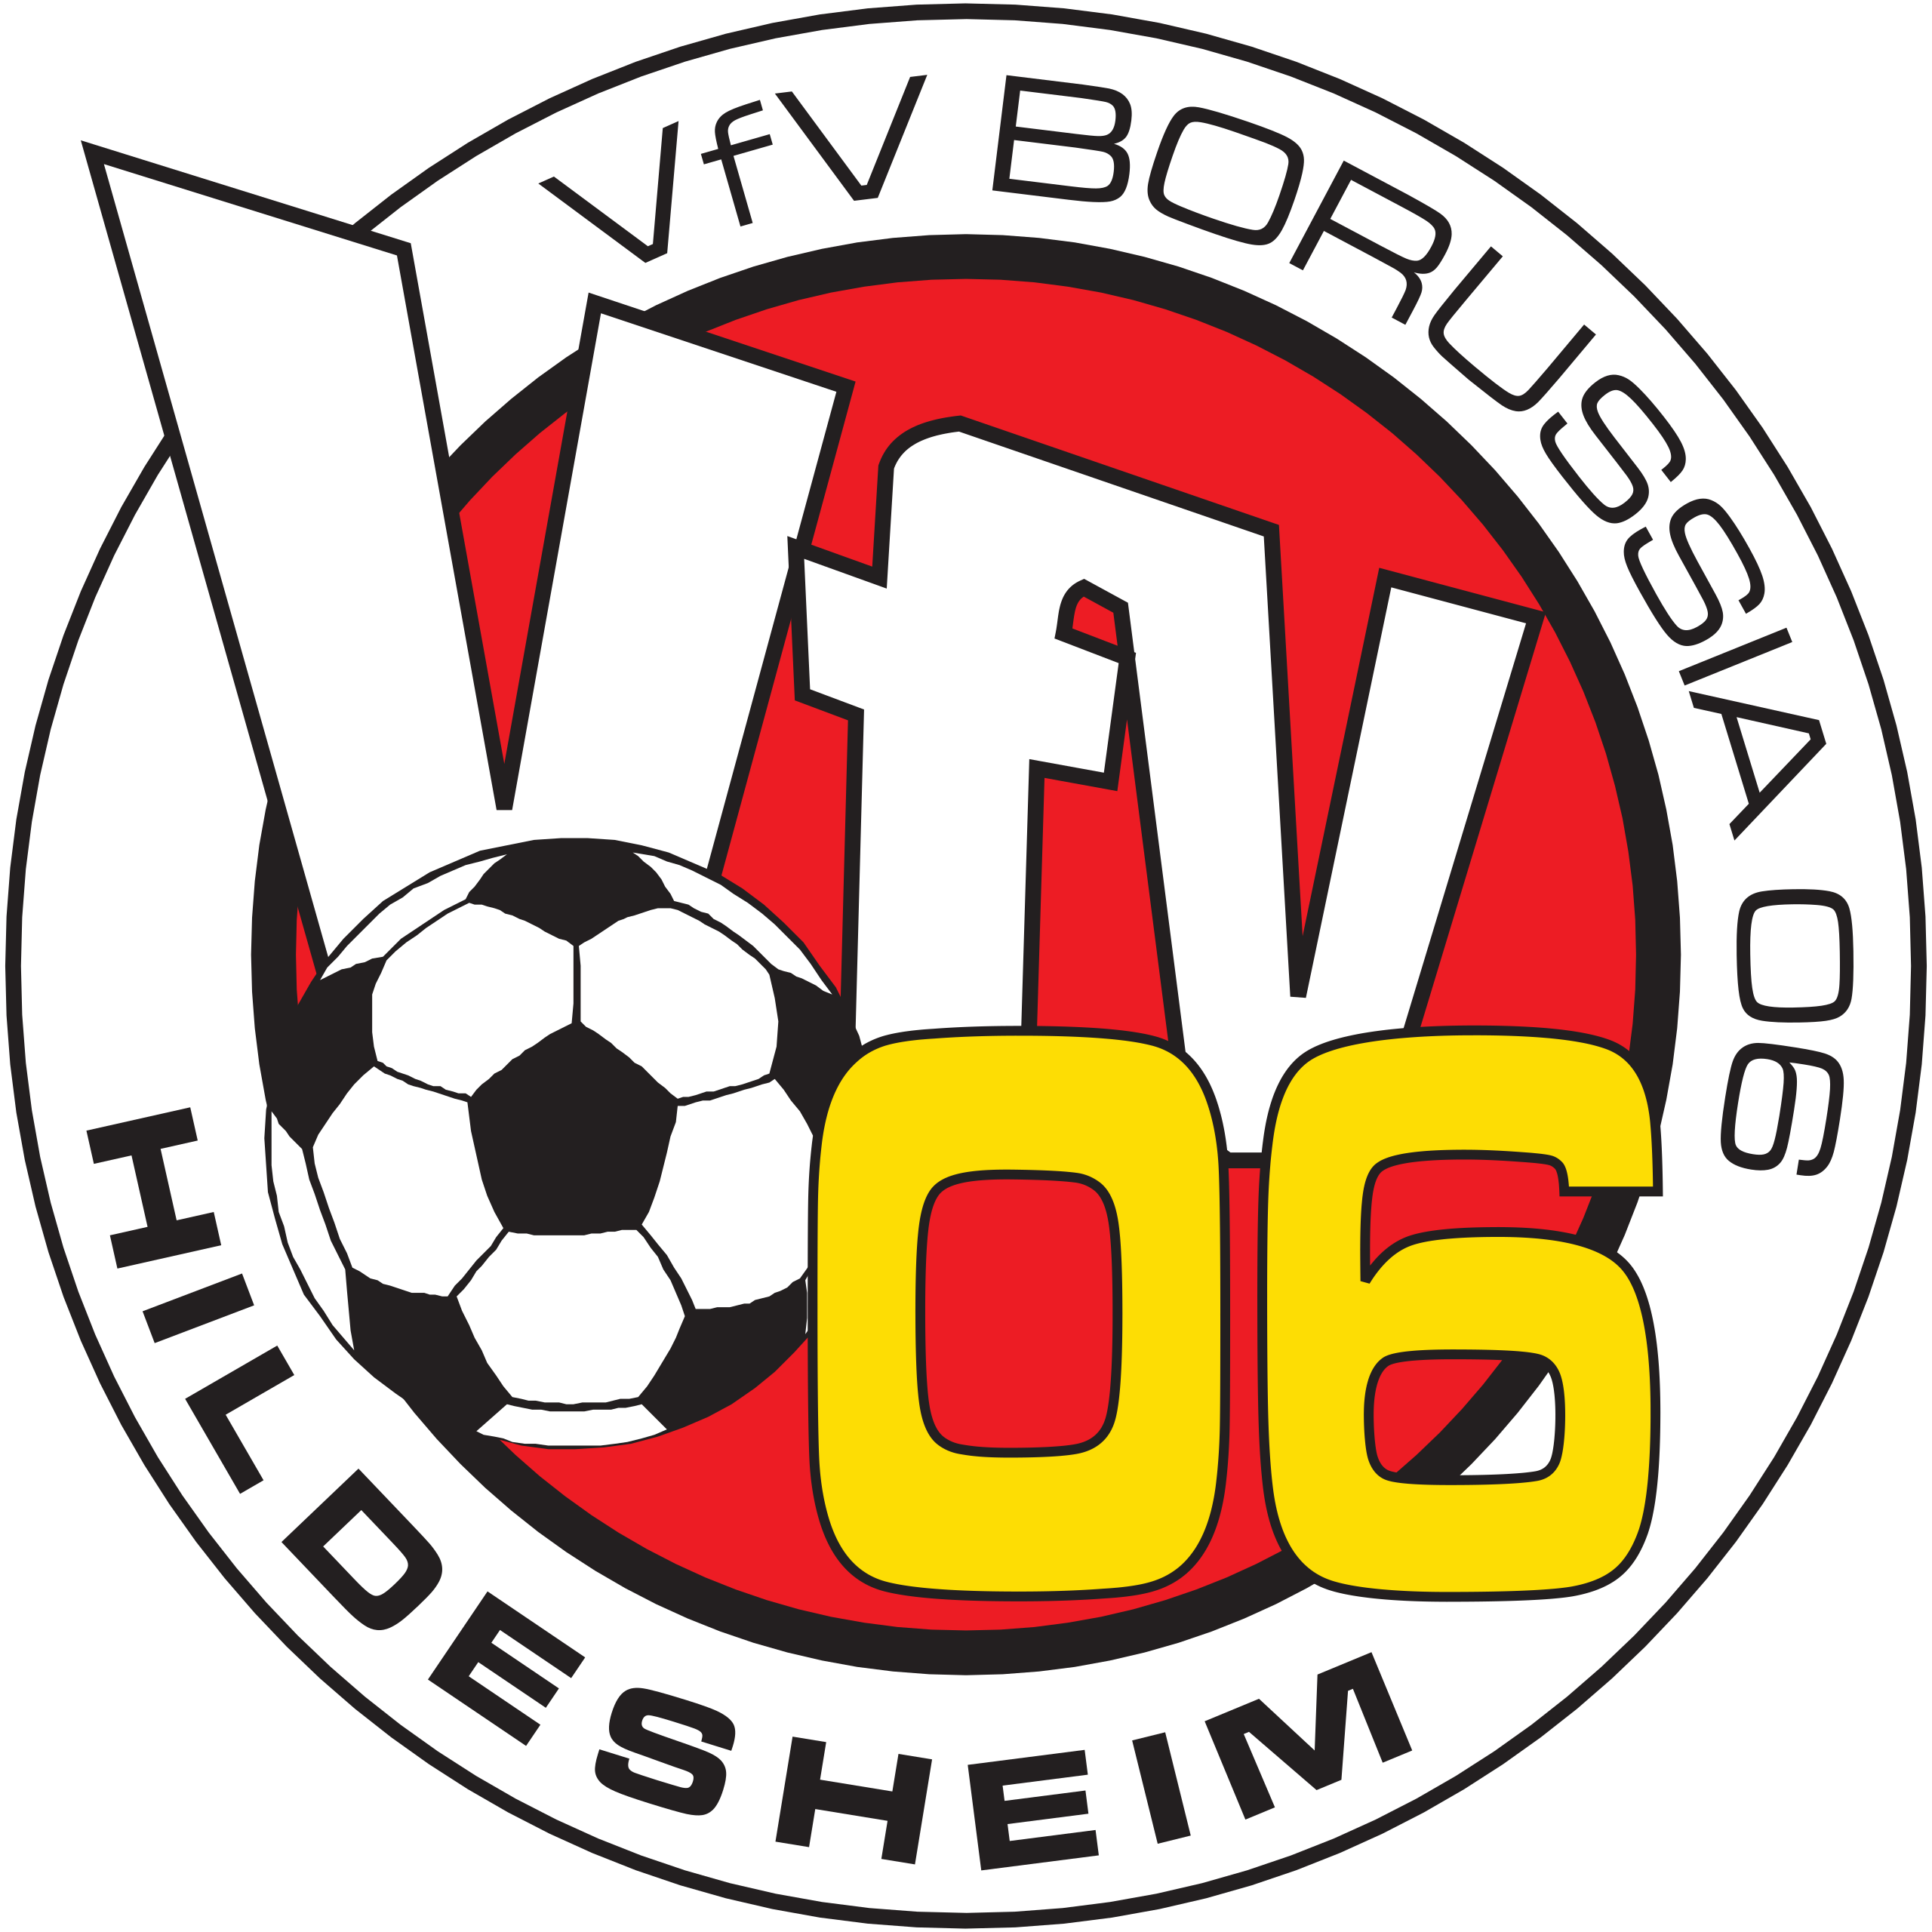 Mein Klub: VfV 06 Hildesheim